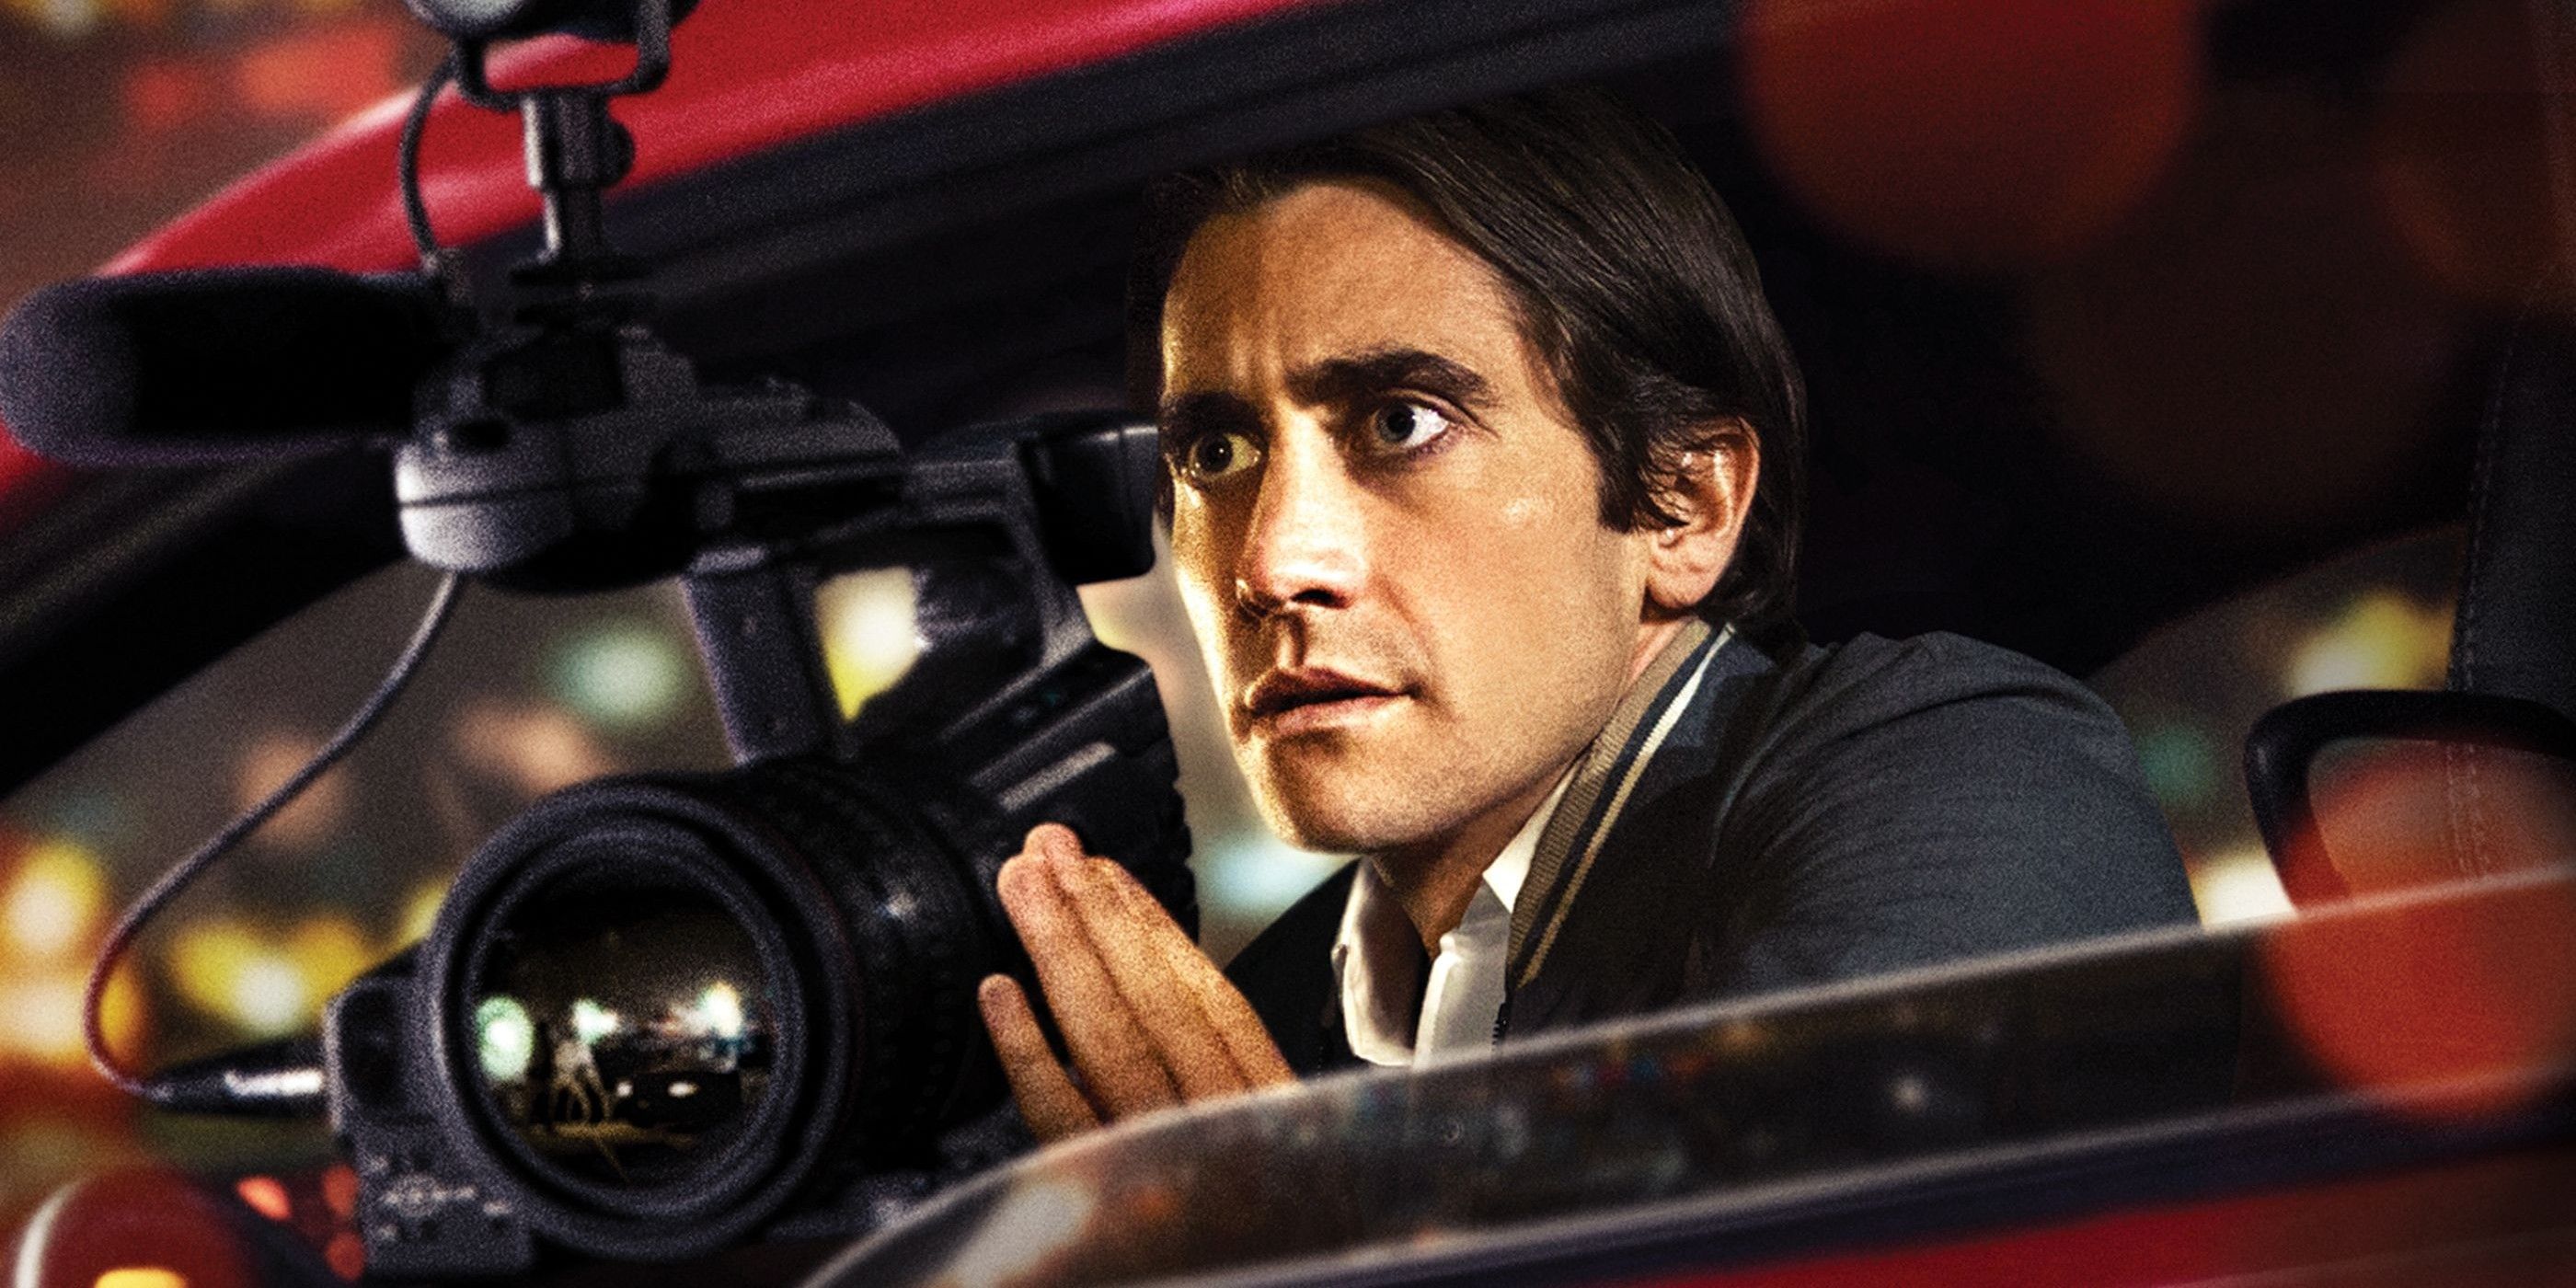 Jake Gyllenhaal In Talks To Star In Michael Bay Thriller Ambulance